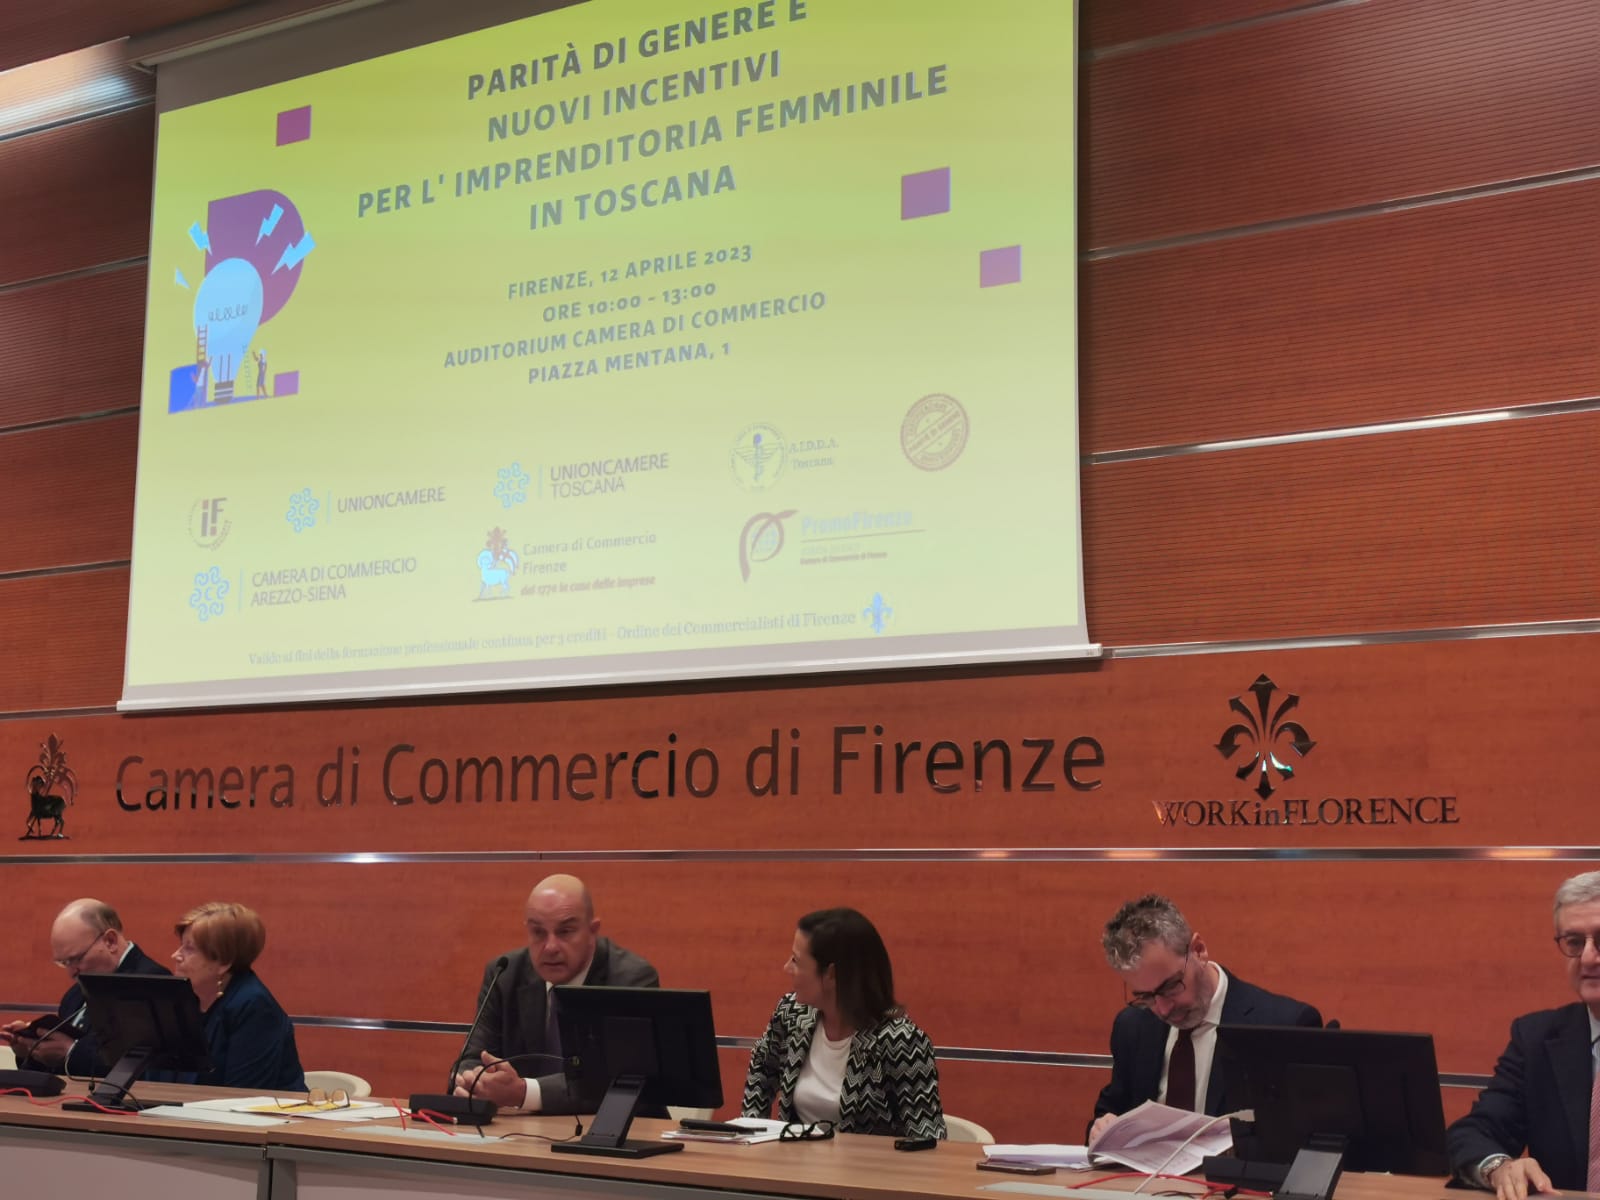 Imprese al femminile in Toscana: tra parità e nuovi incentivi